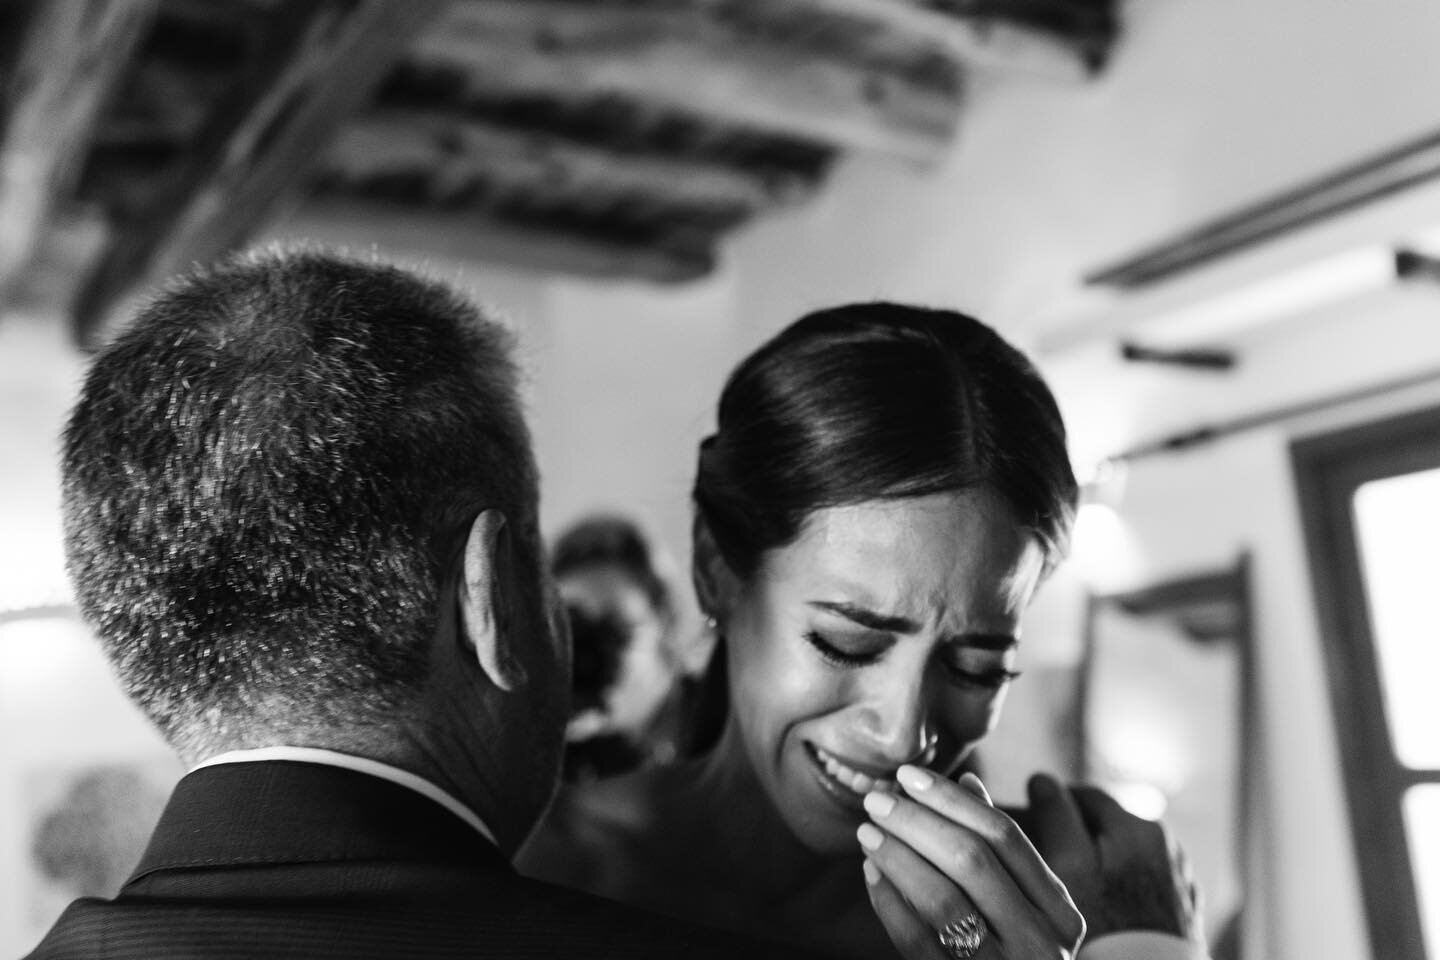 Full of emotion
.
.
.
.

📸: @rodrigarciaphotographer para @tach_studio 
.
.
.
#casamento #harpersbazaar #harpersbazaarspain #vogue #vogueweddings #weddingfashion #filmpalette #portraitcollective #wedphotoinspiration #junebugweddings #magnoliarouge #